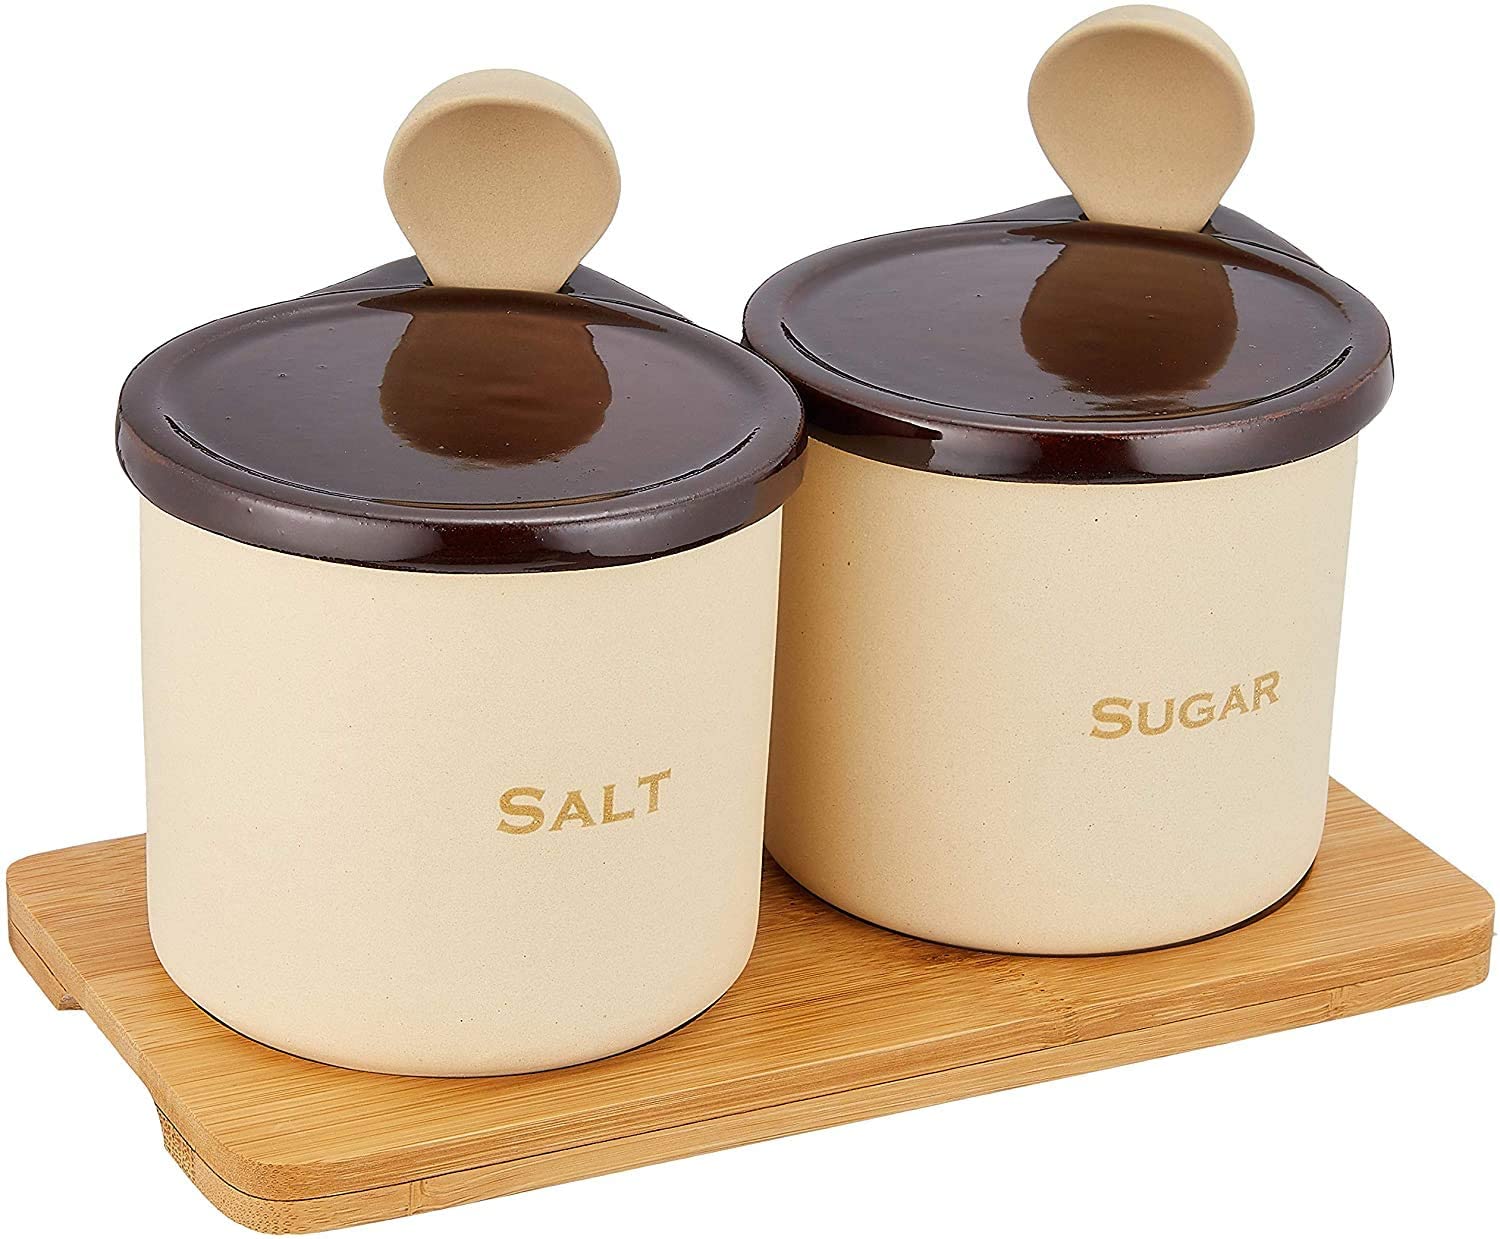 Stainless Steel Sugar & Cream Set Bowl Jug Tea Coffee Serving Table Storage Trip Camping Home Kitchen 